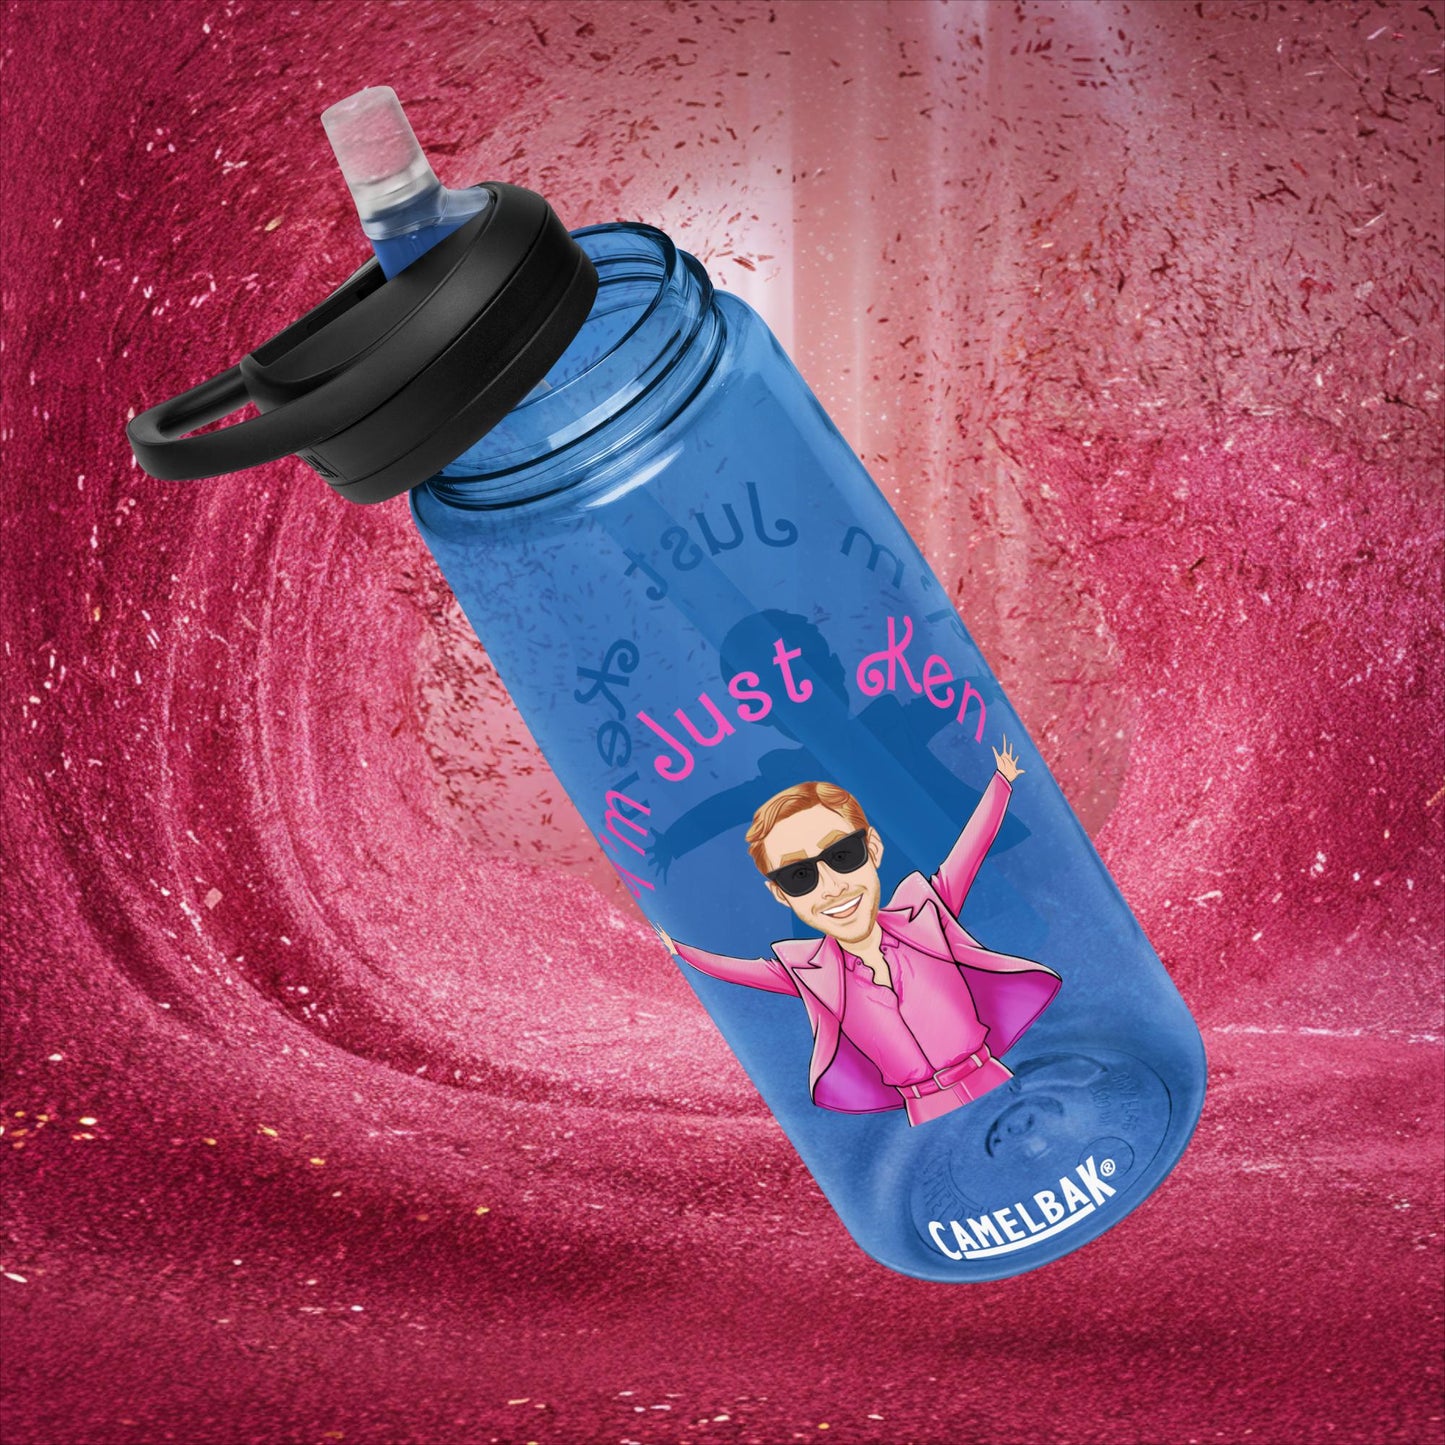 Ken Barbie Ryan Gosling I'm Just Ken Sports water bottle Next Cult Brand